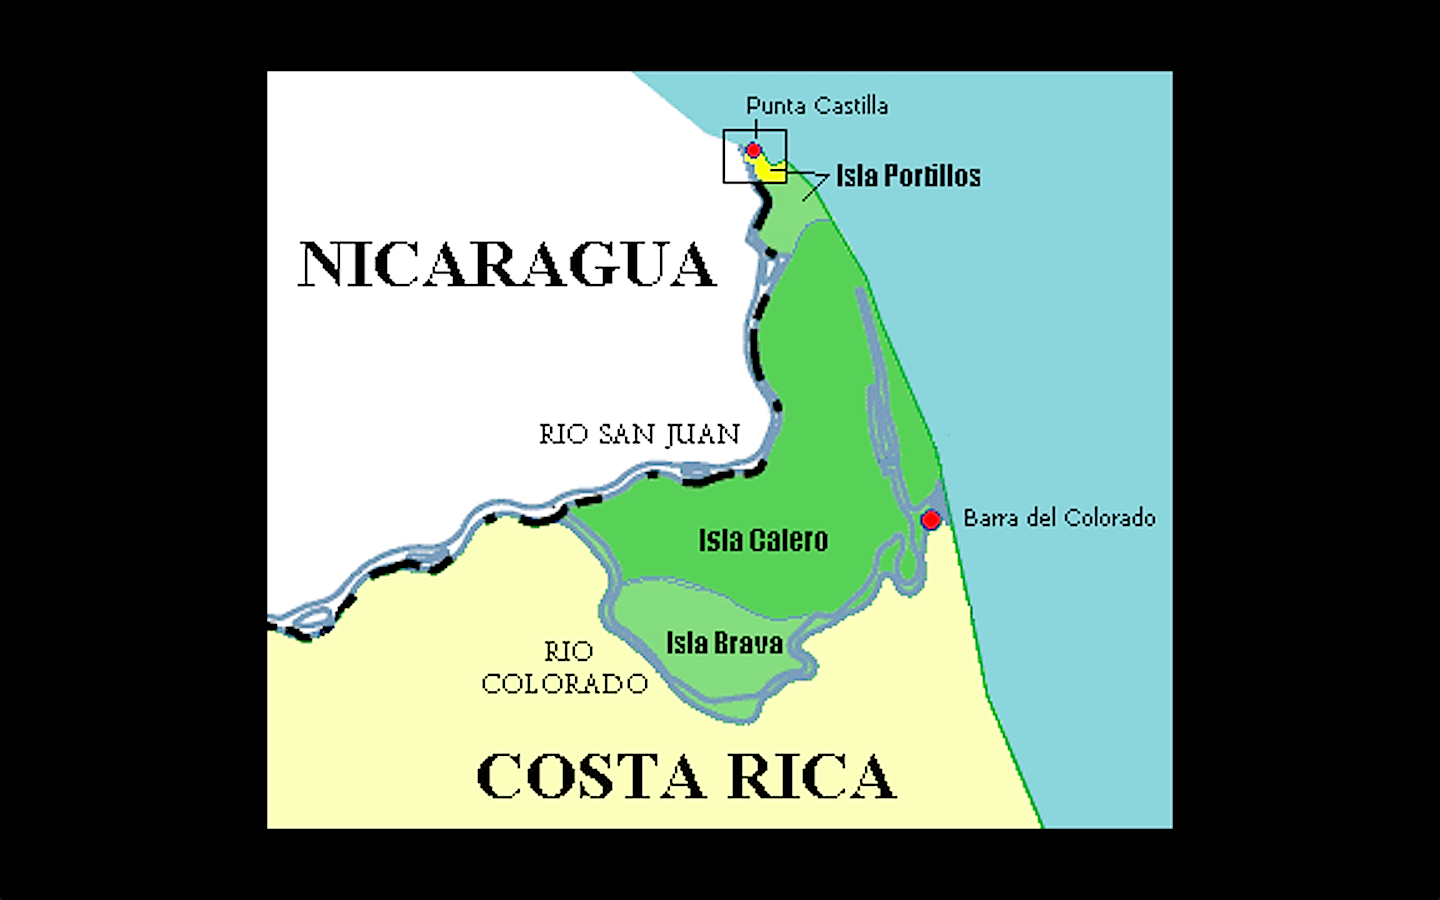 Territorial Limits between Costa Rica and Nicaragua